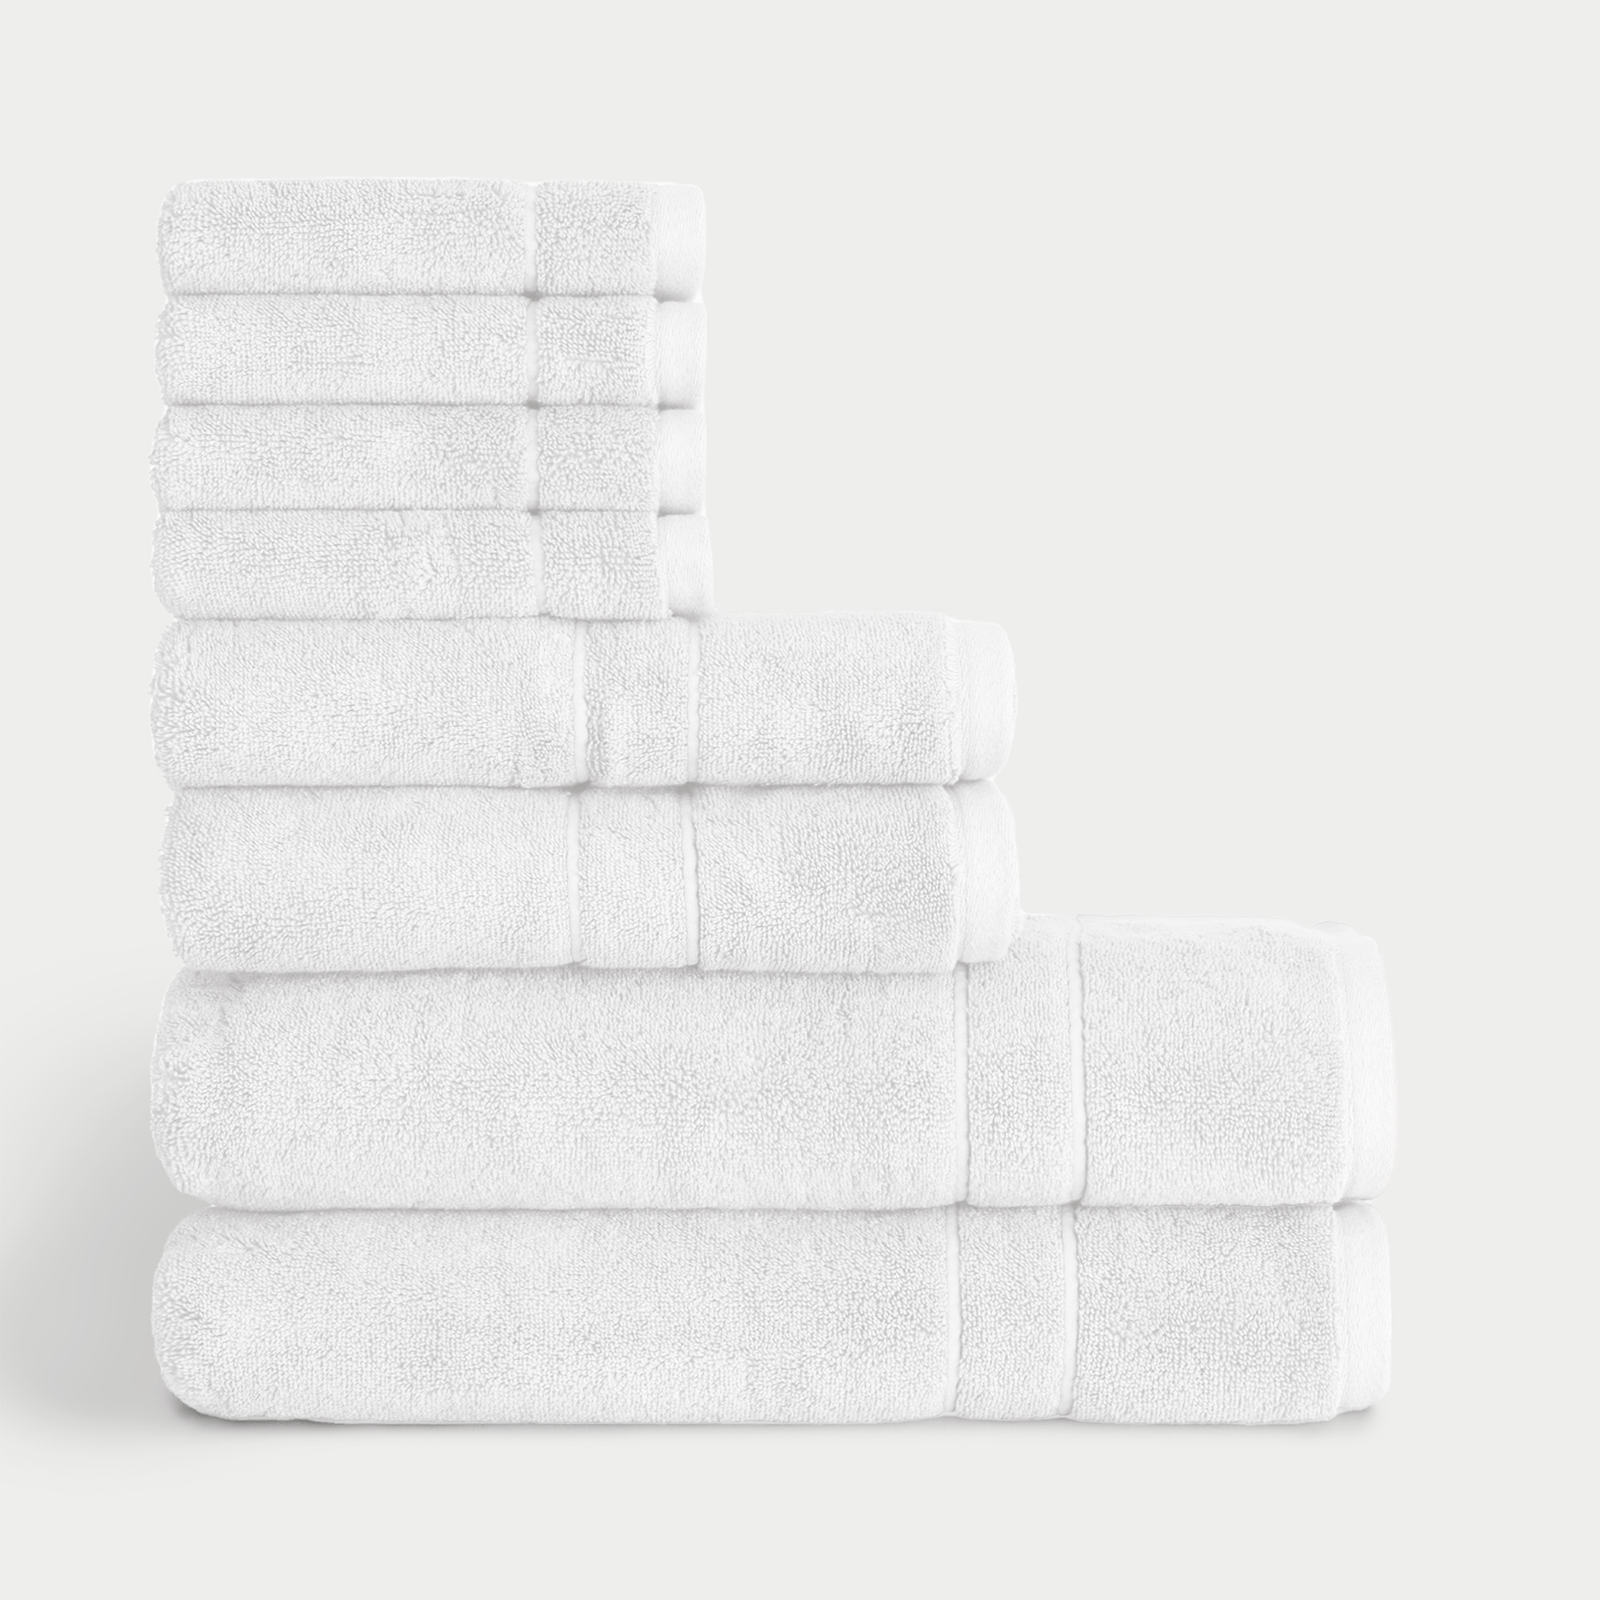 Premium Plush Bath Towel Set in the color White. Photo of Premium Plush Bath Towel Set taken with white background 